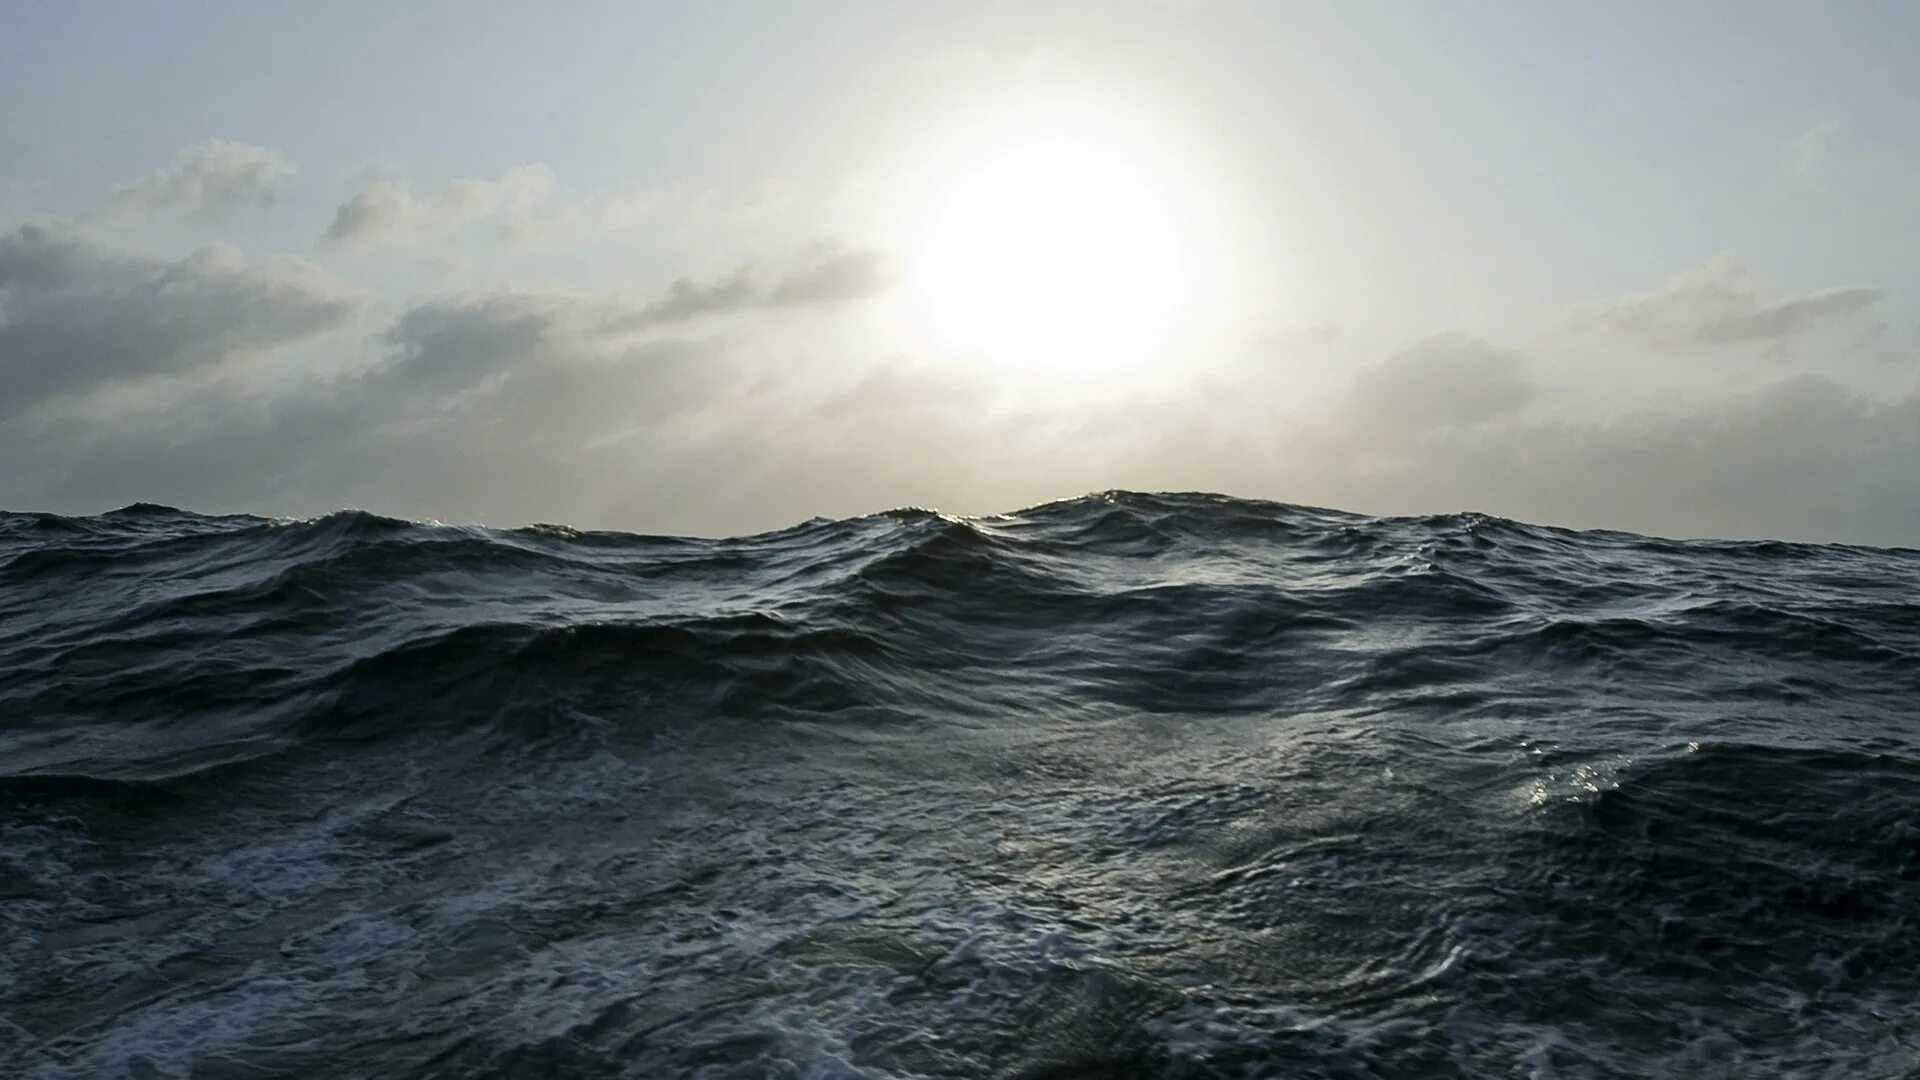 Первый открытый океан. Баренцево море шторм. Атлантический океан шторм. Темное море. Океан волны.